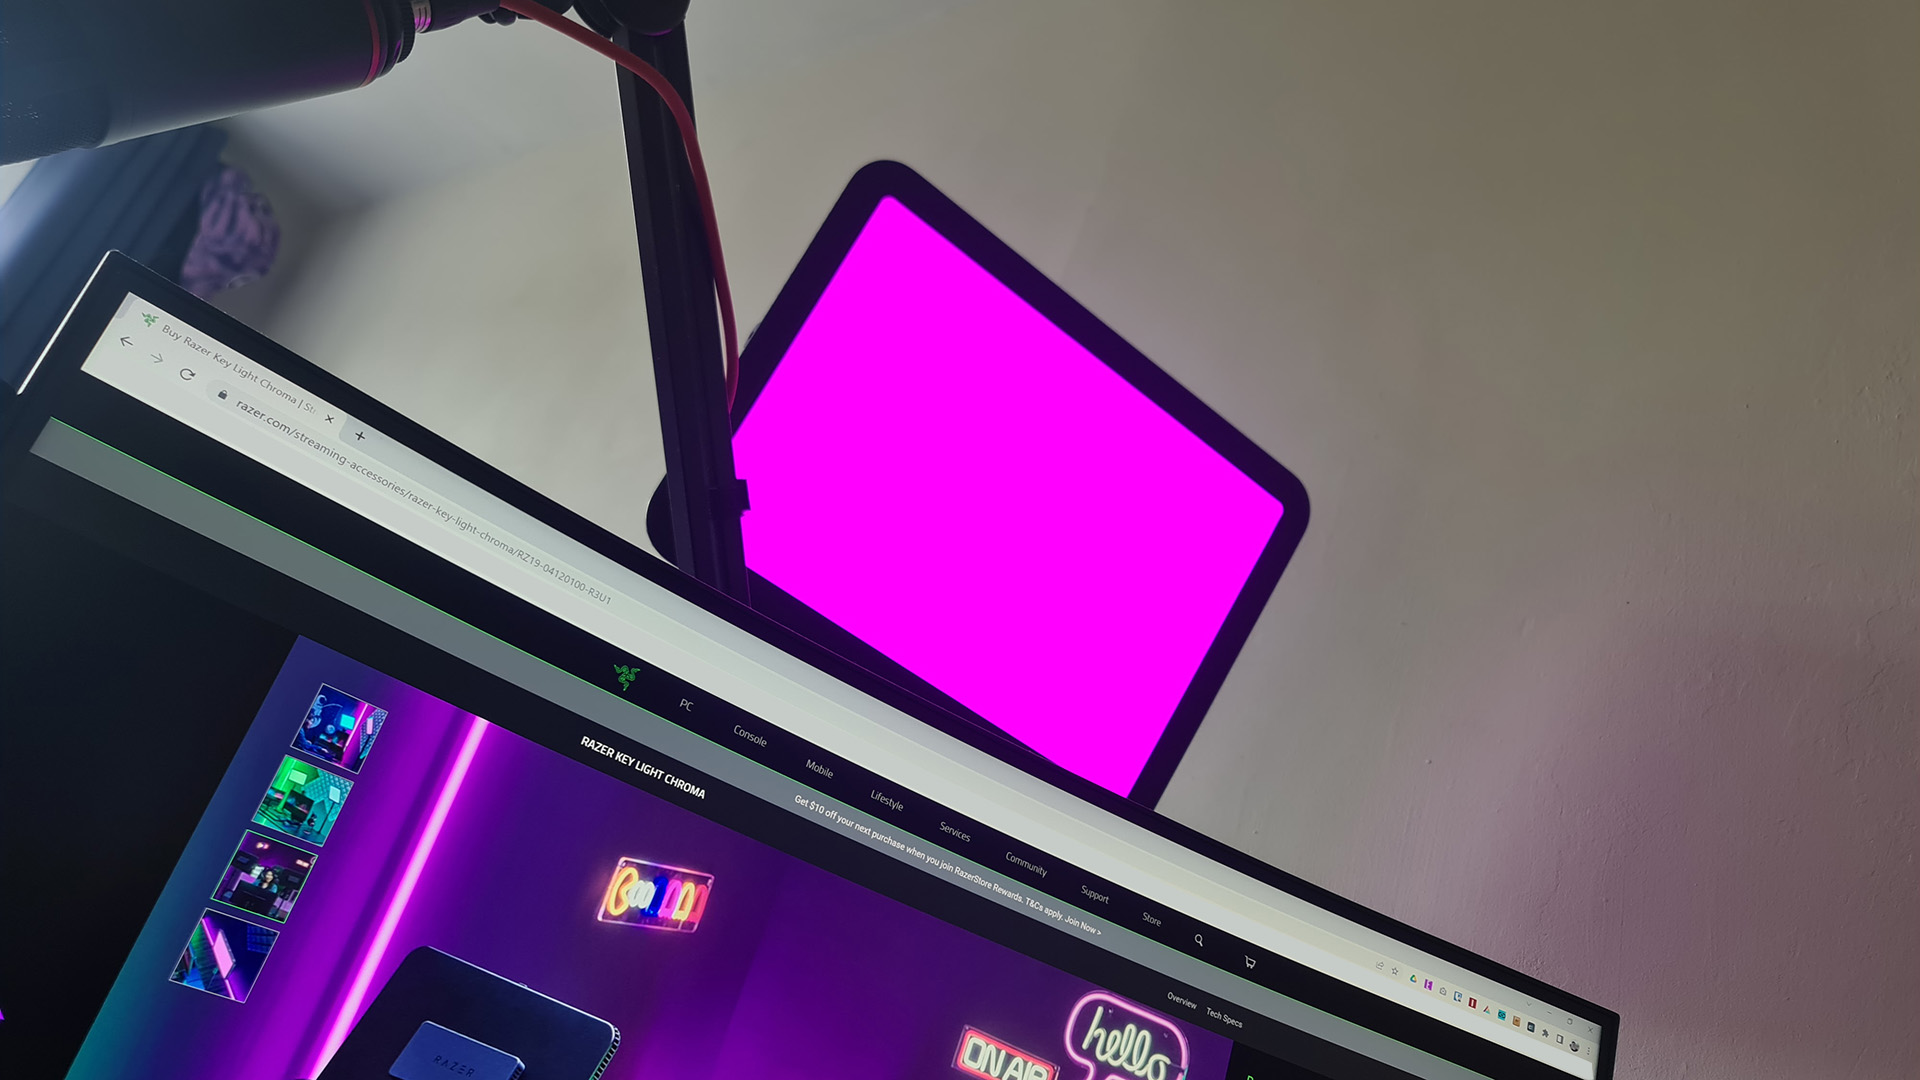 A Razer Key Light Chroma pictured installed on a desk